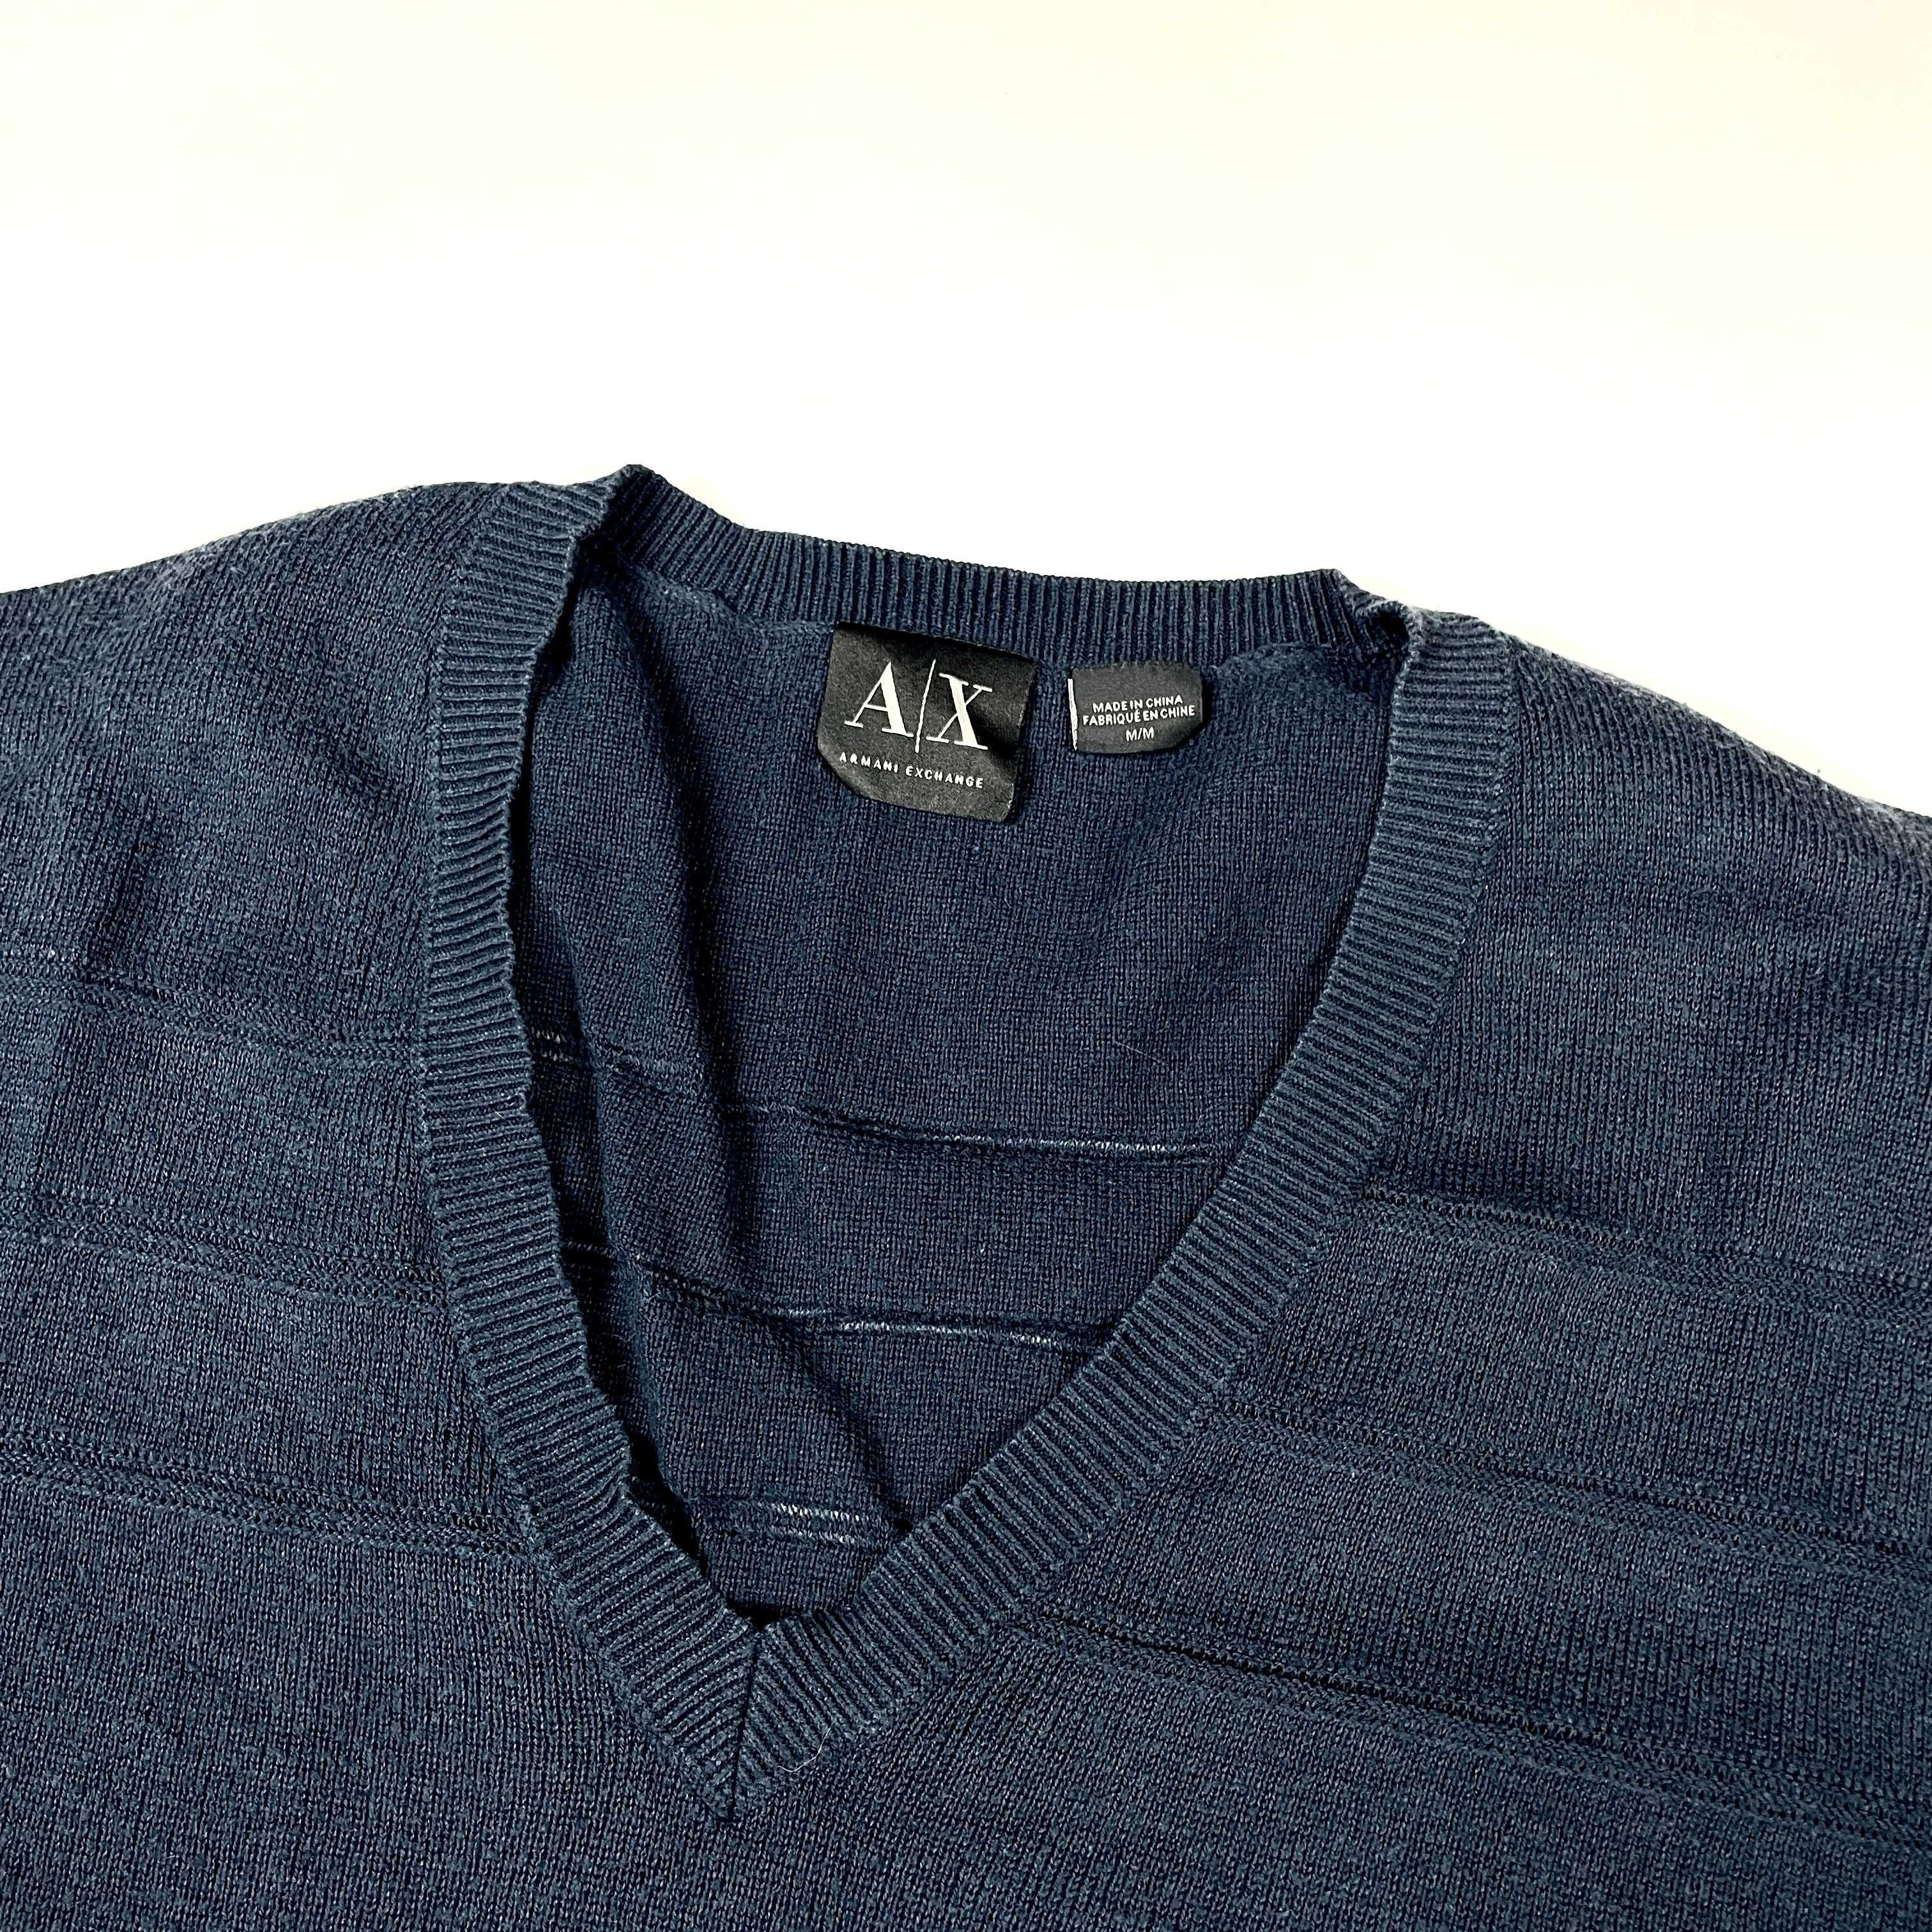 Armani navy sweterek v neck vintage retro 90s washed (M)